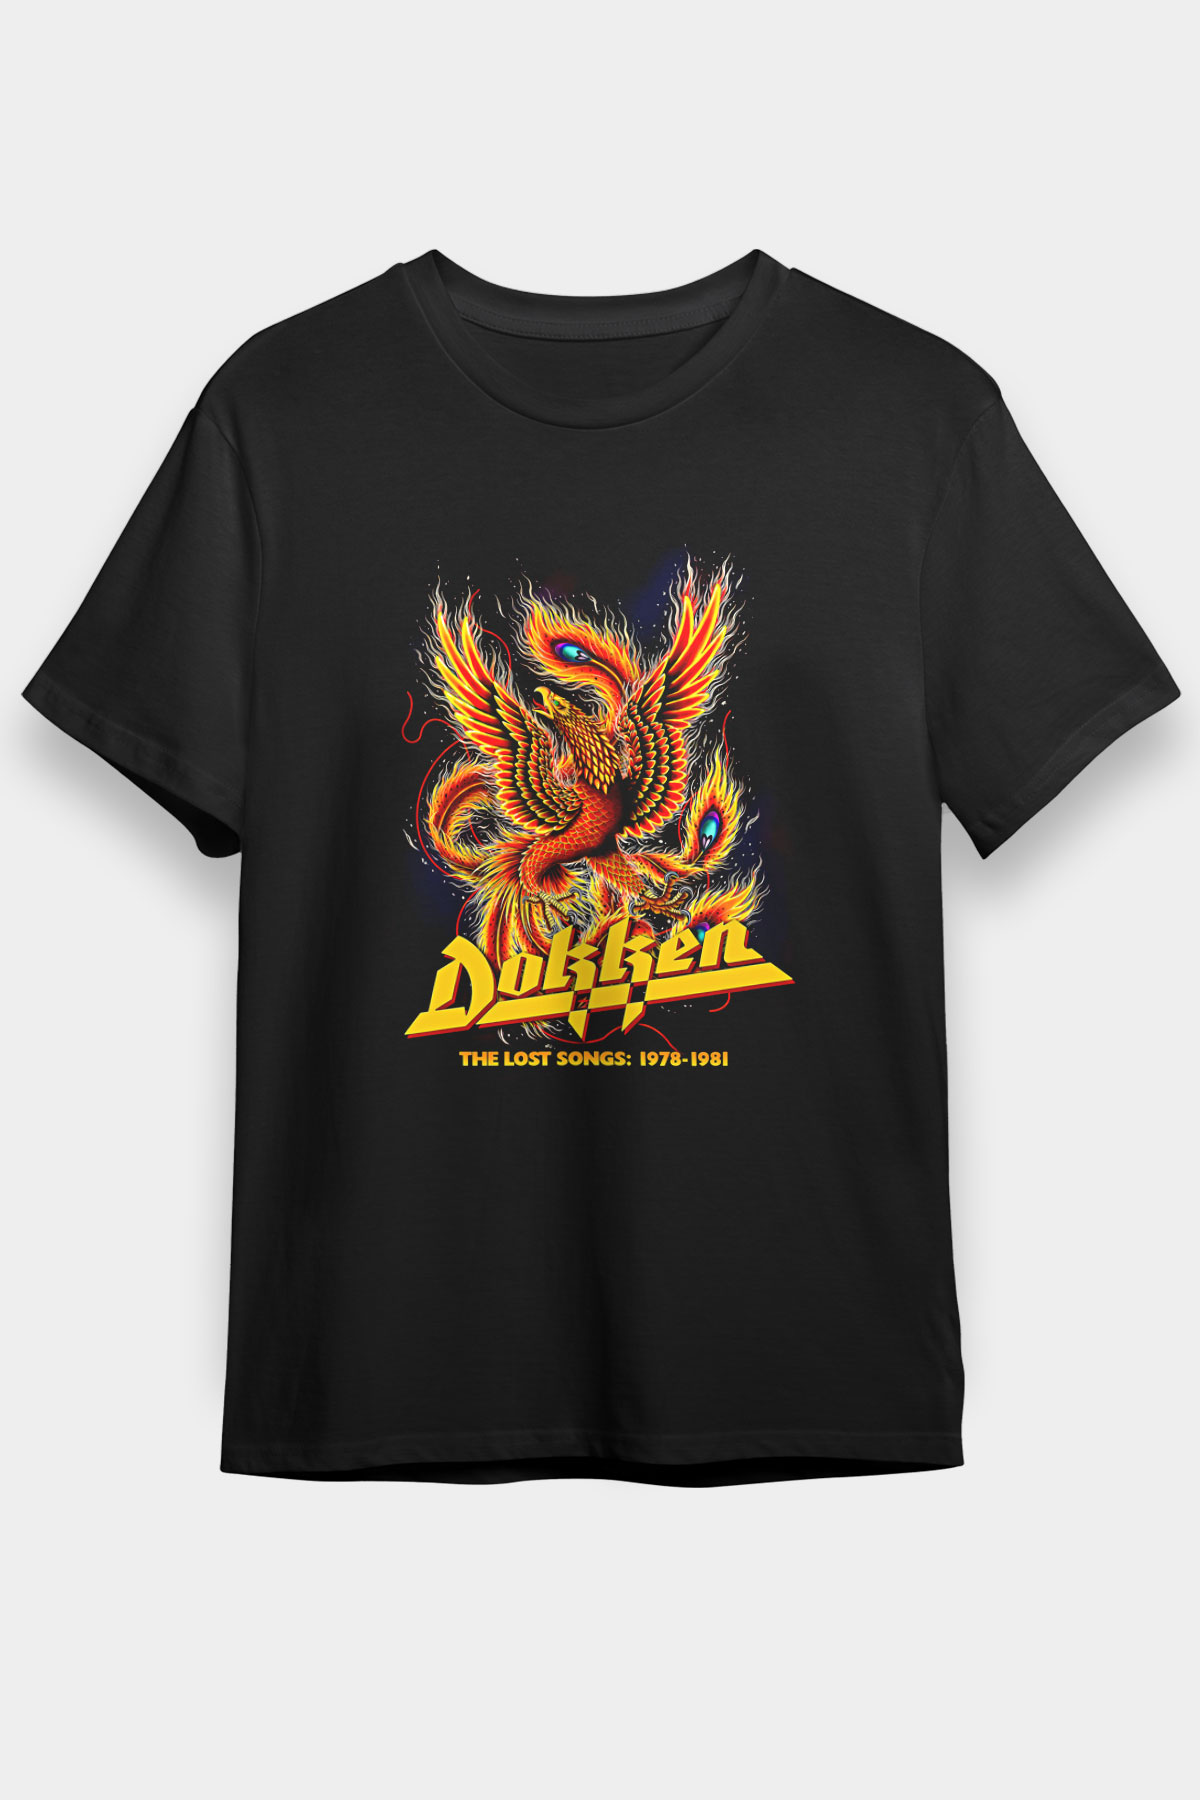 Dokken  T shirt,Music Band,Unisex Tshirt 15/